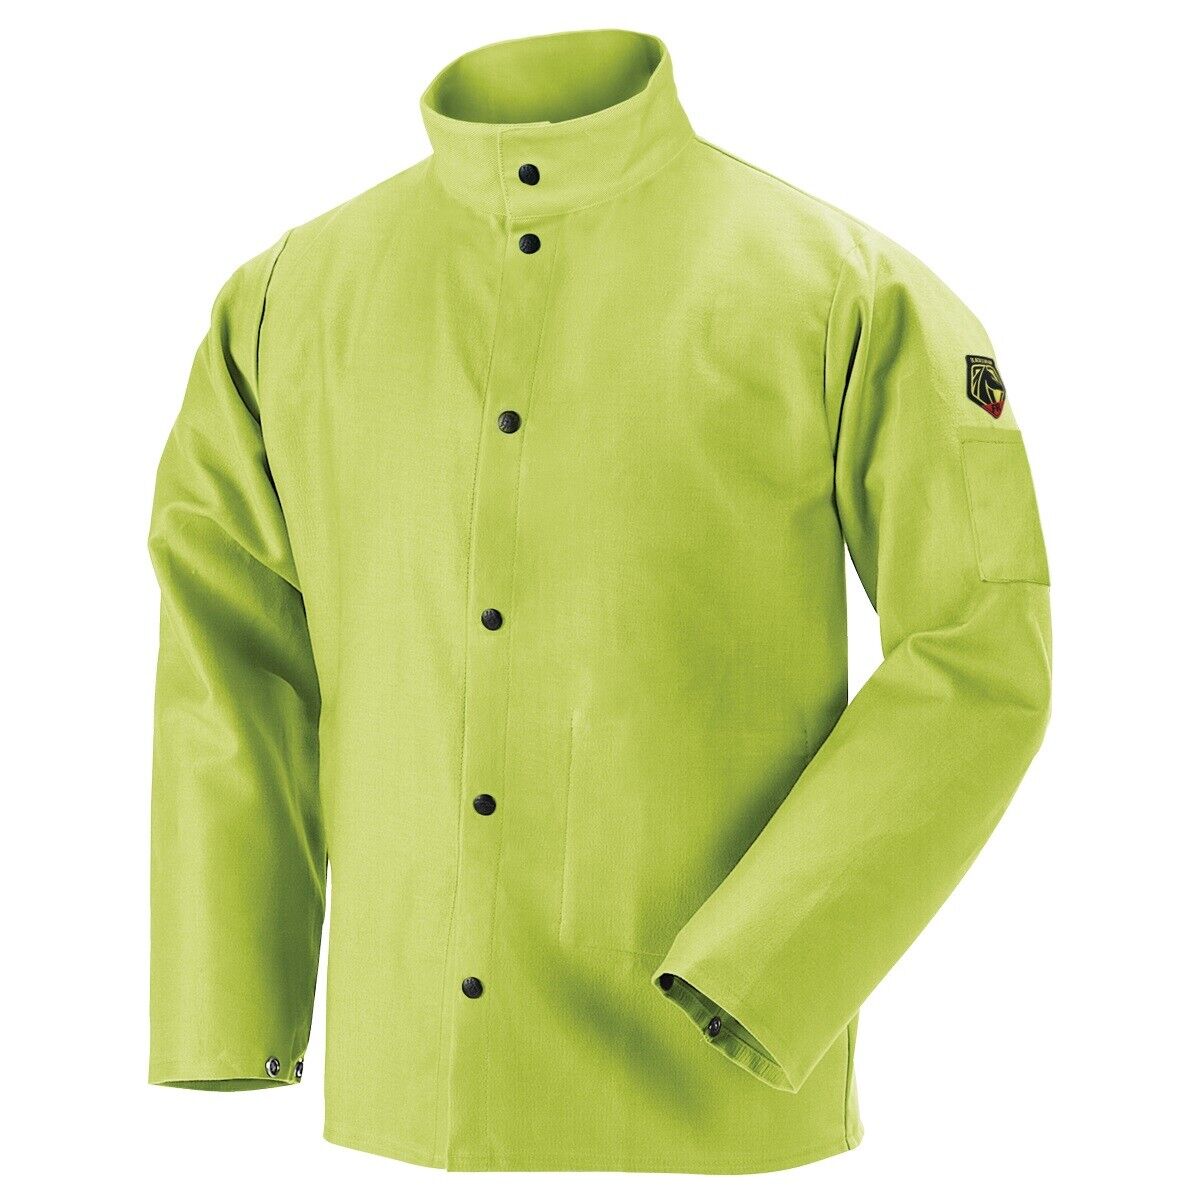 Revco Black Stallion 9oz Lime FR Cotton Welding Jacket (Large) (